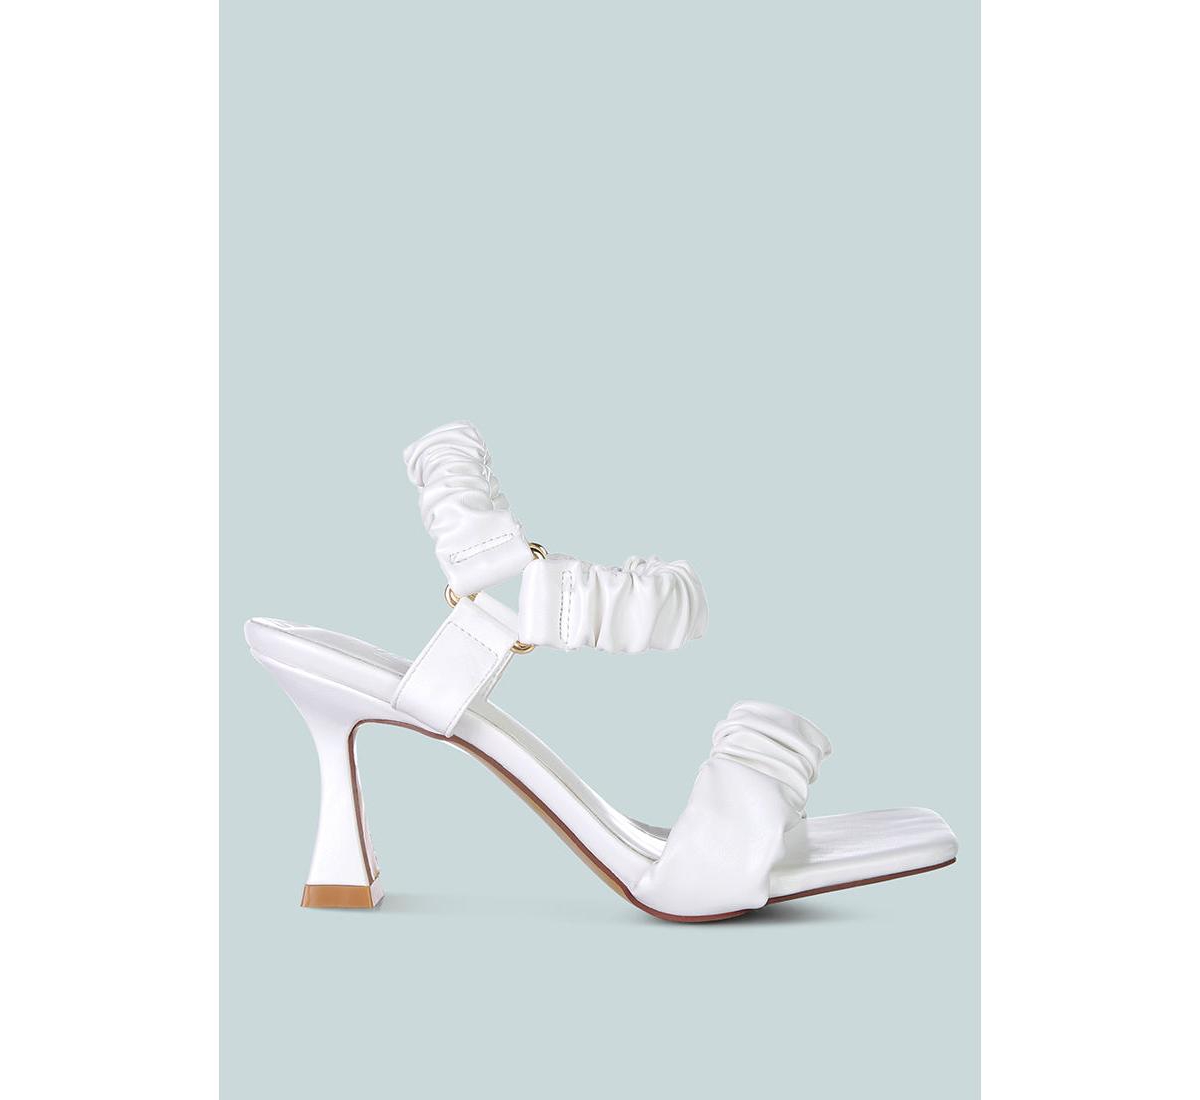 Merker ruched spool heel casual sandals - White